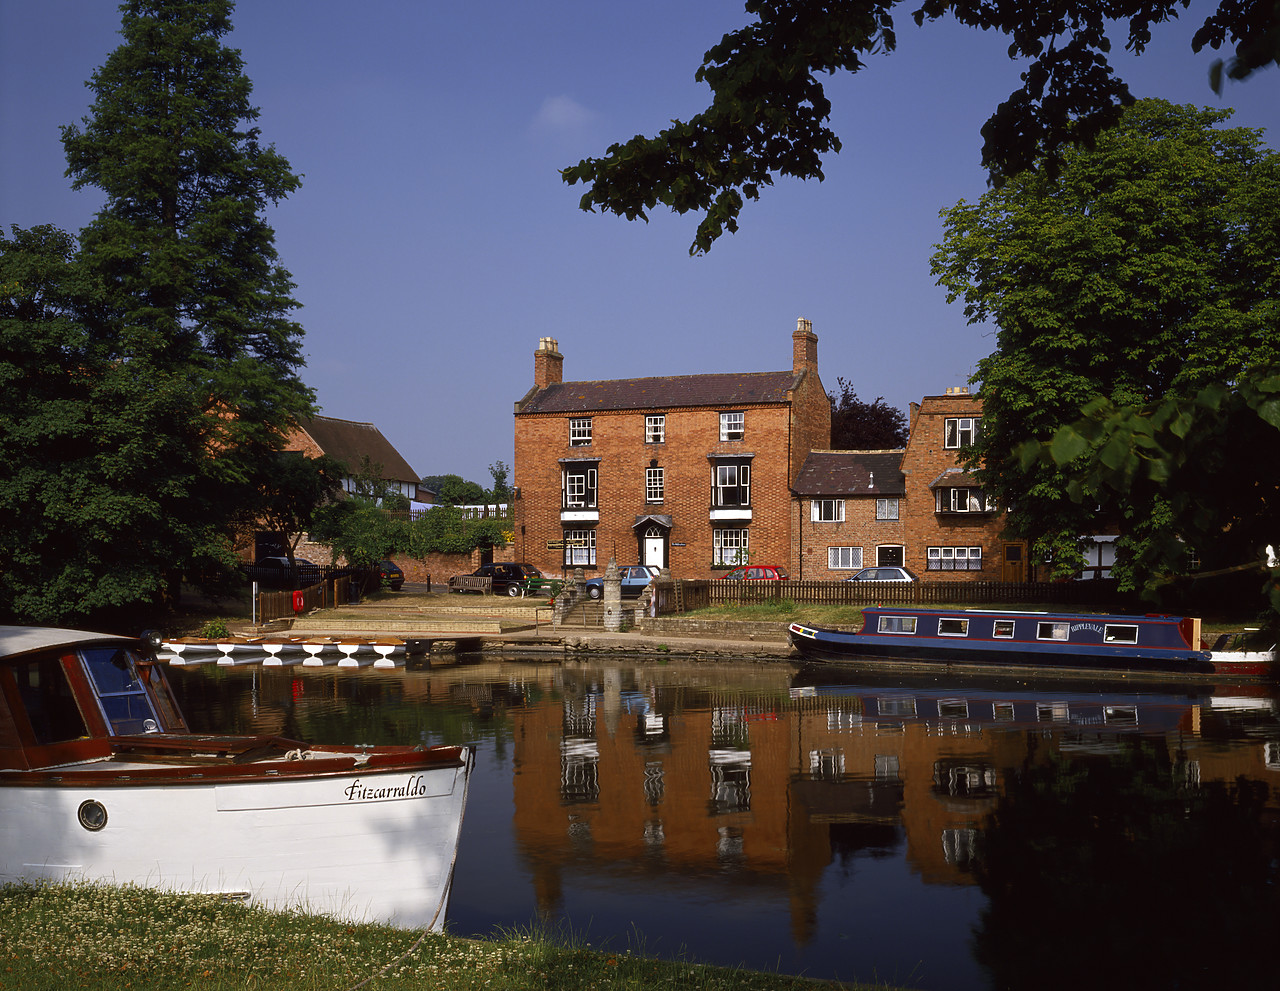 #944805-2 - The River Avon, Stratford-upon-Avon, Warwickshire, England